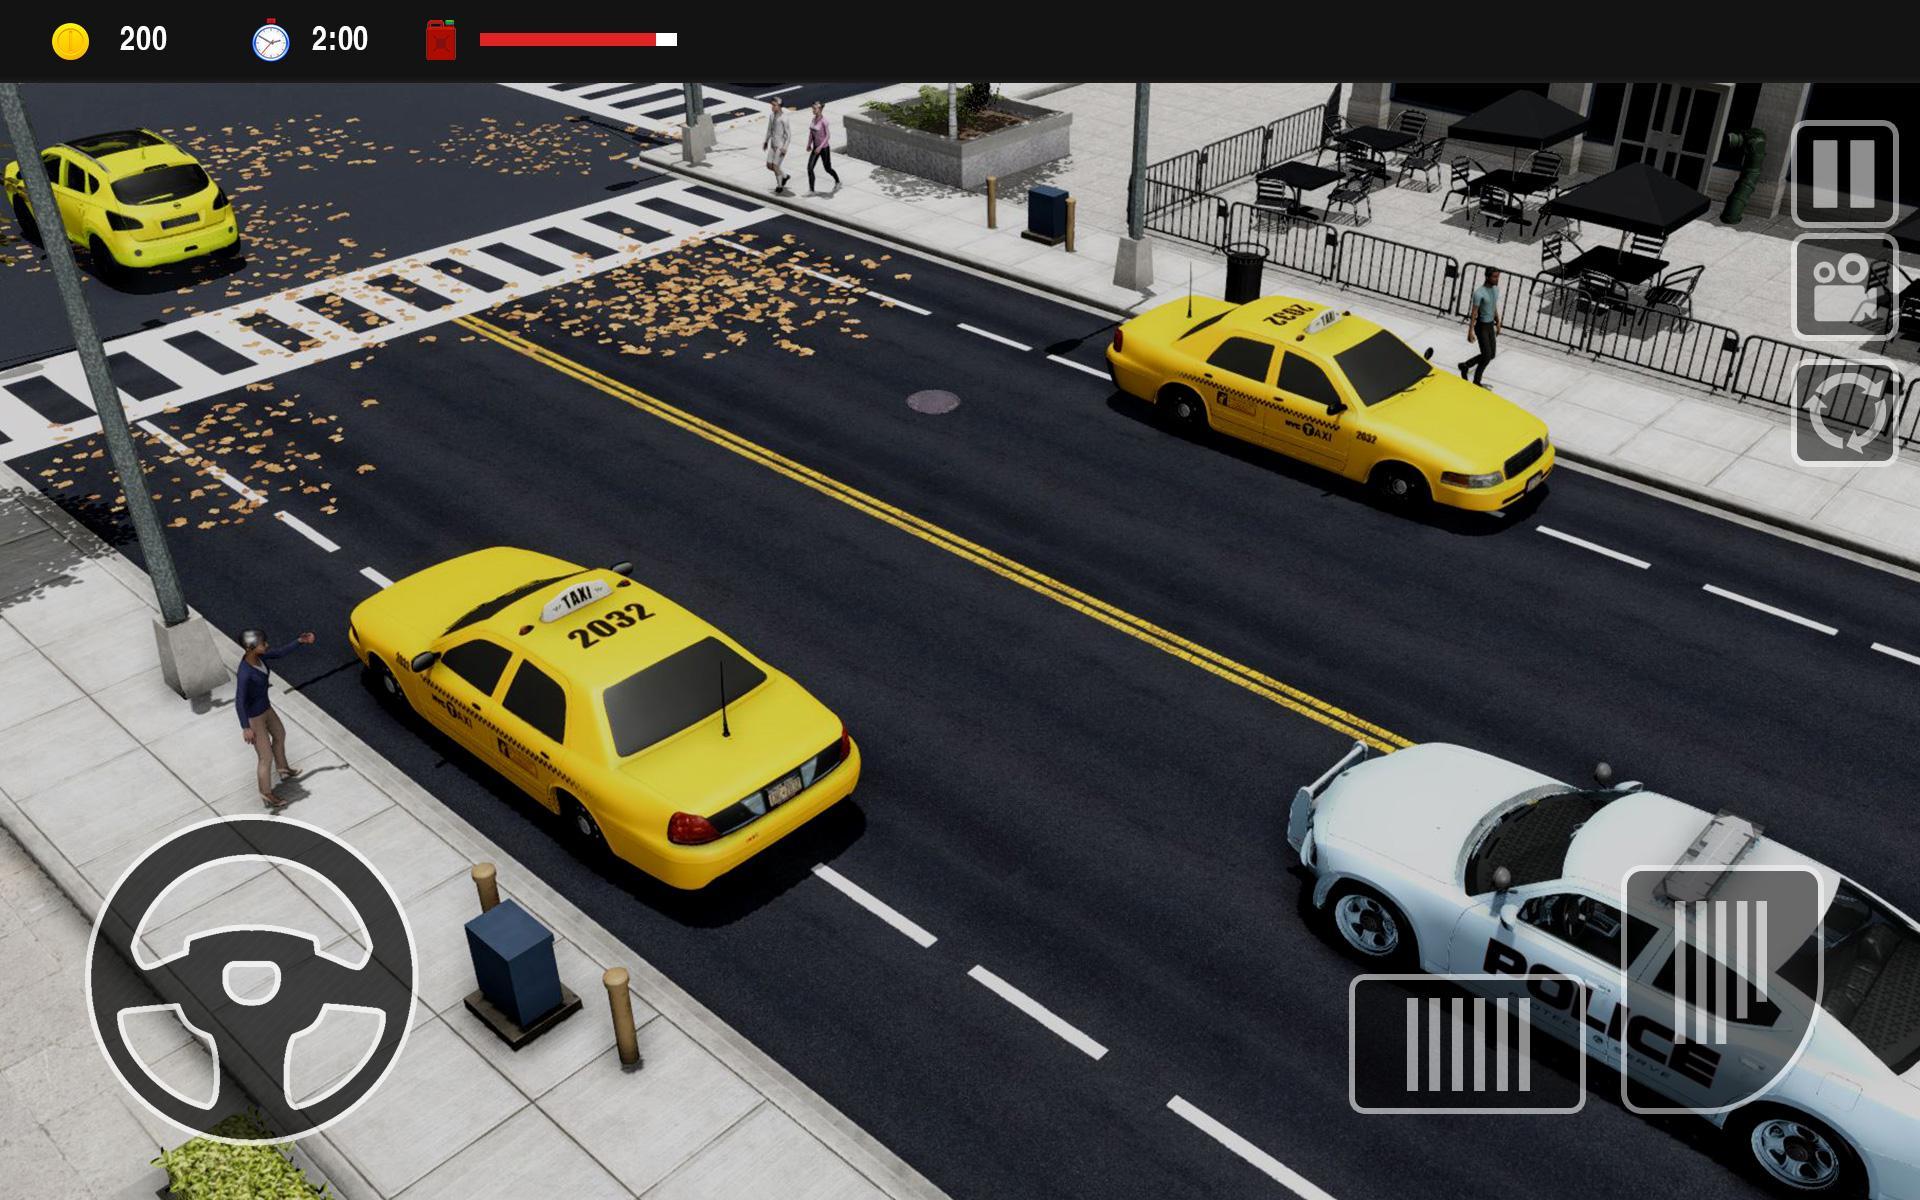 Игра такси по городу. Симулятор такси на ПК. Такси симулятор 2020. Taxi Simulator 2020 на ПК. Taxi simulator на пк